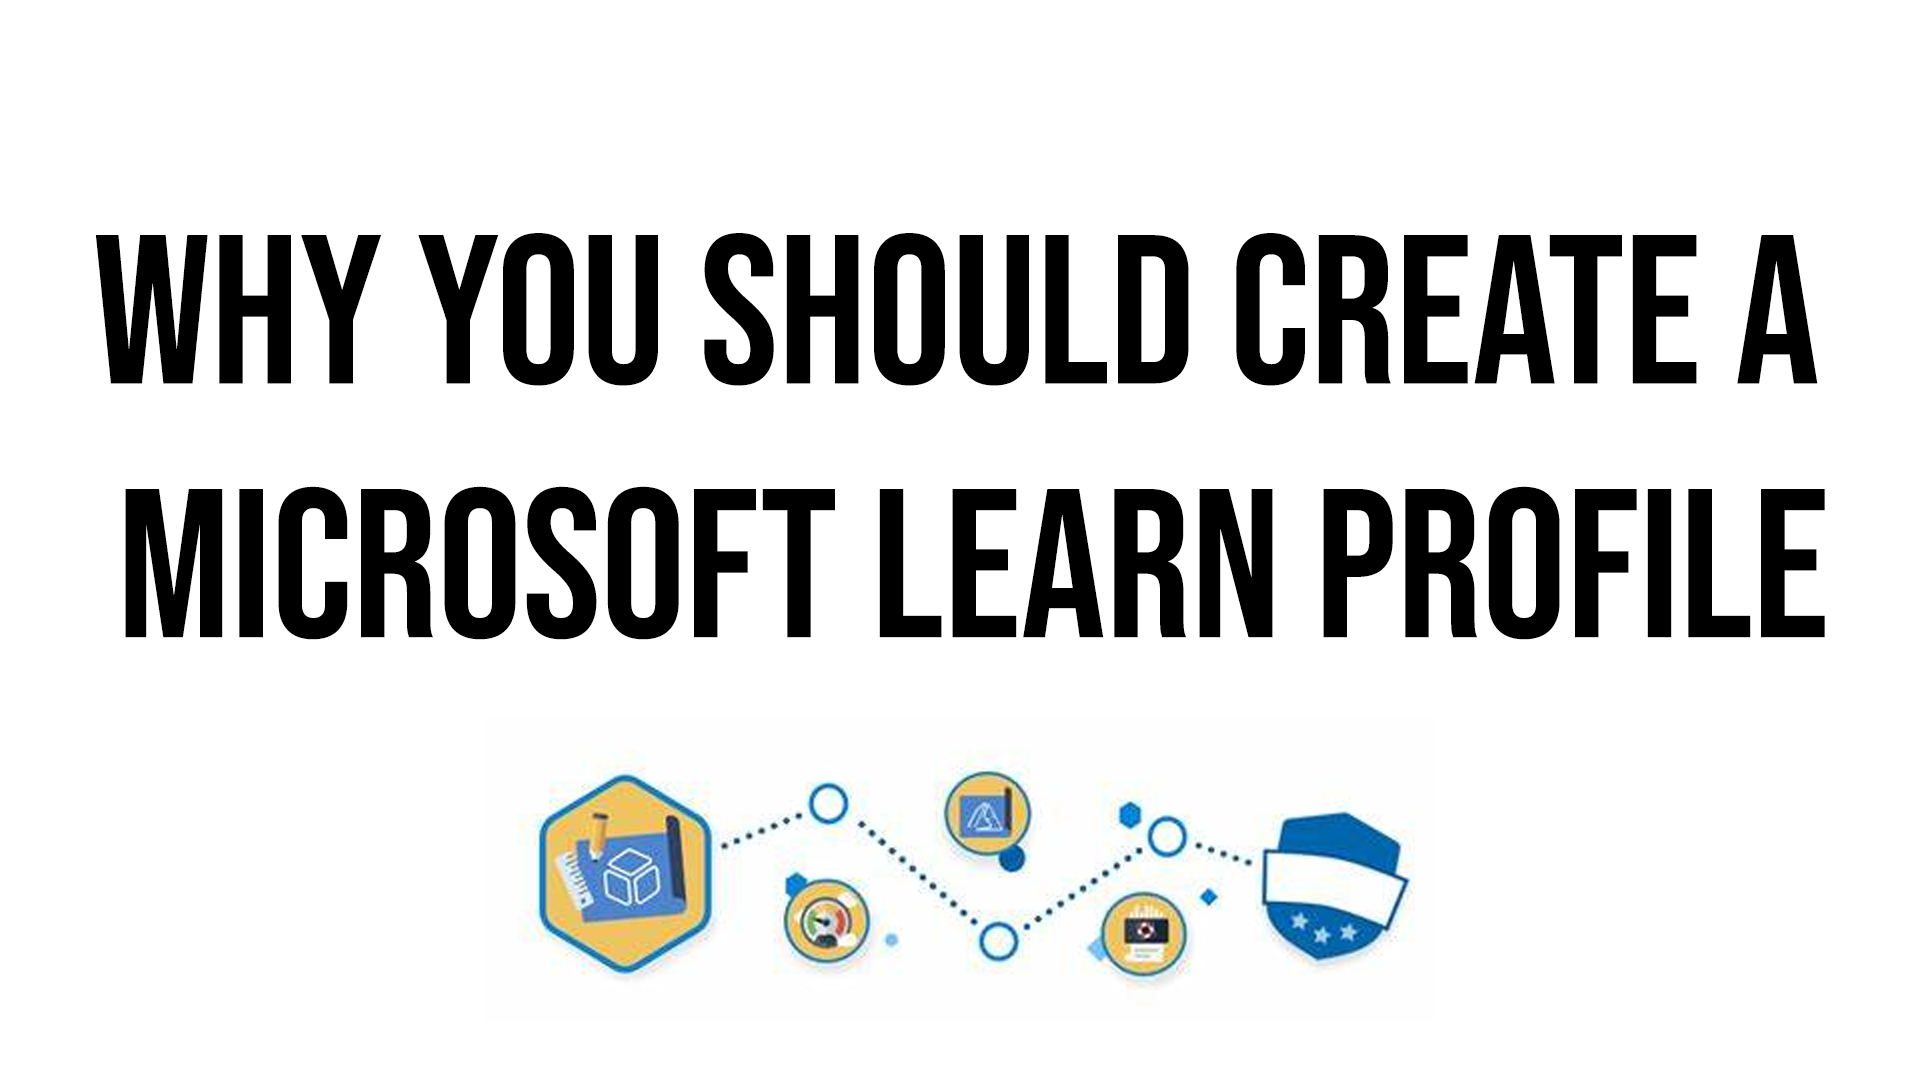 Why you should create a Microsoft Learn Profile